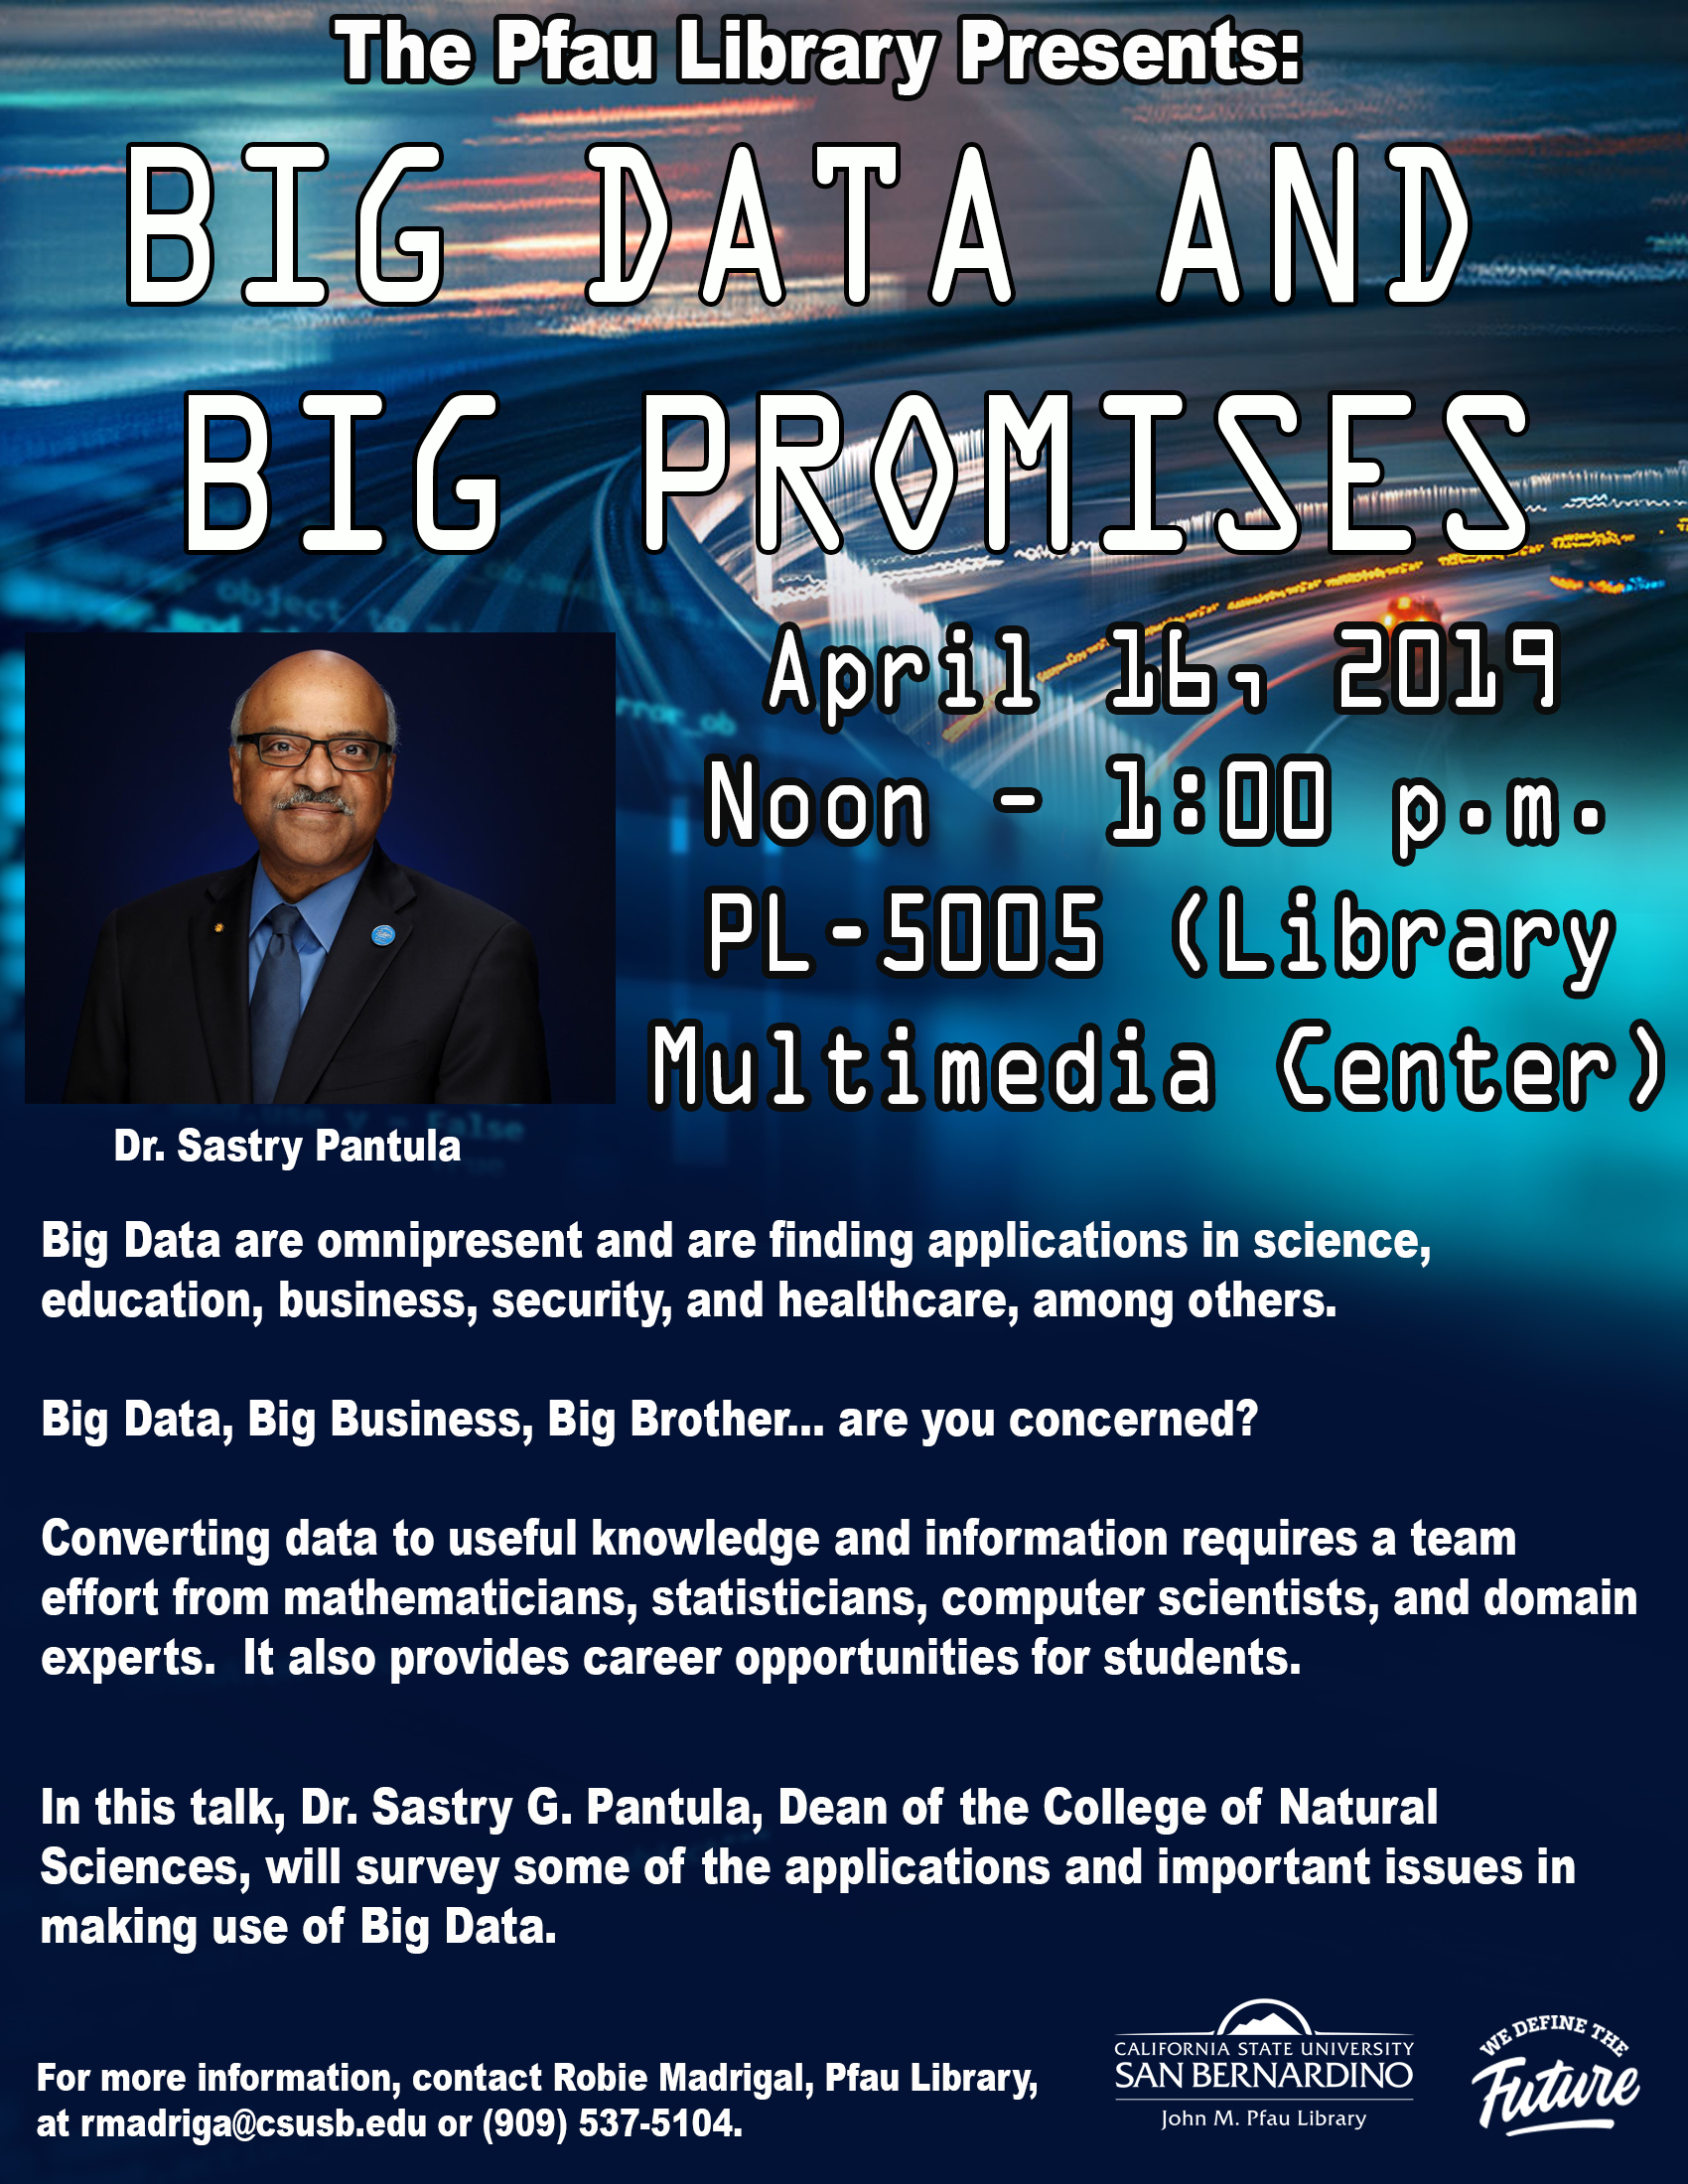 CSUSB dean holds talk at Pfau Library on April 16 on Big Data